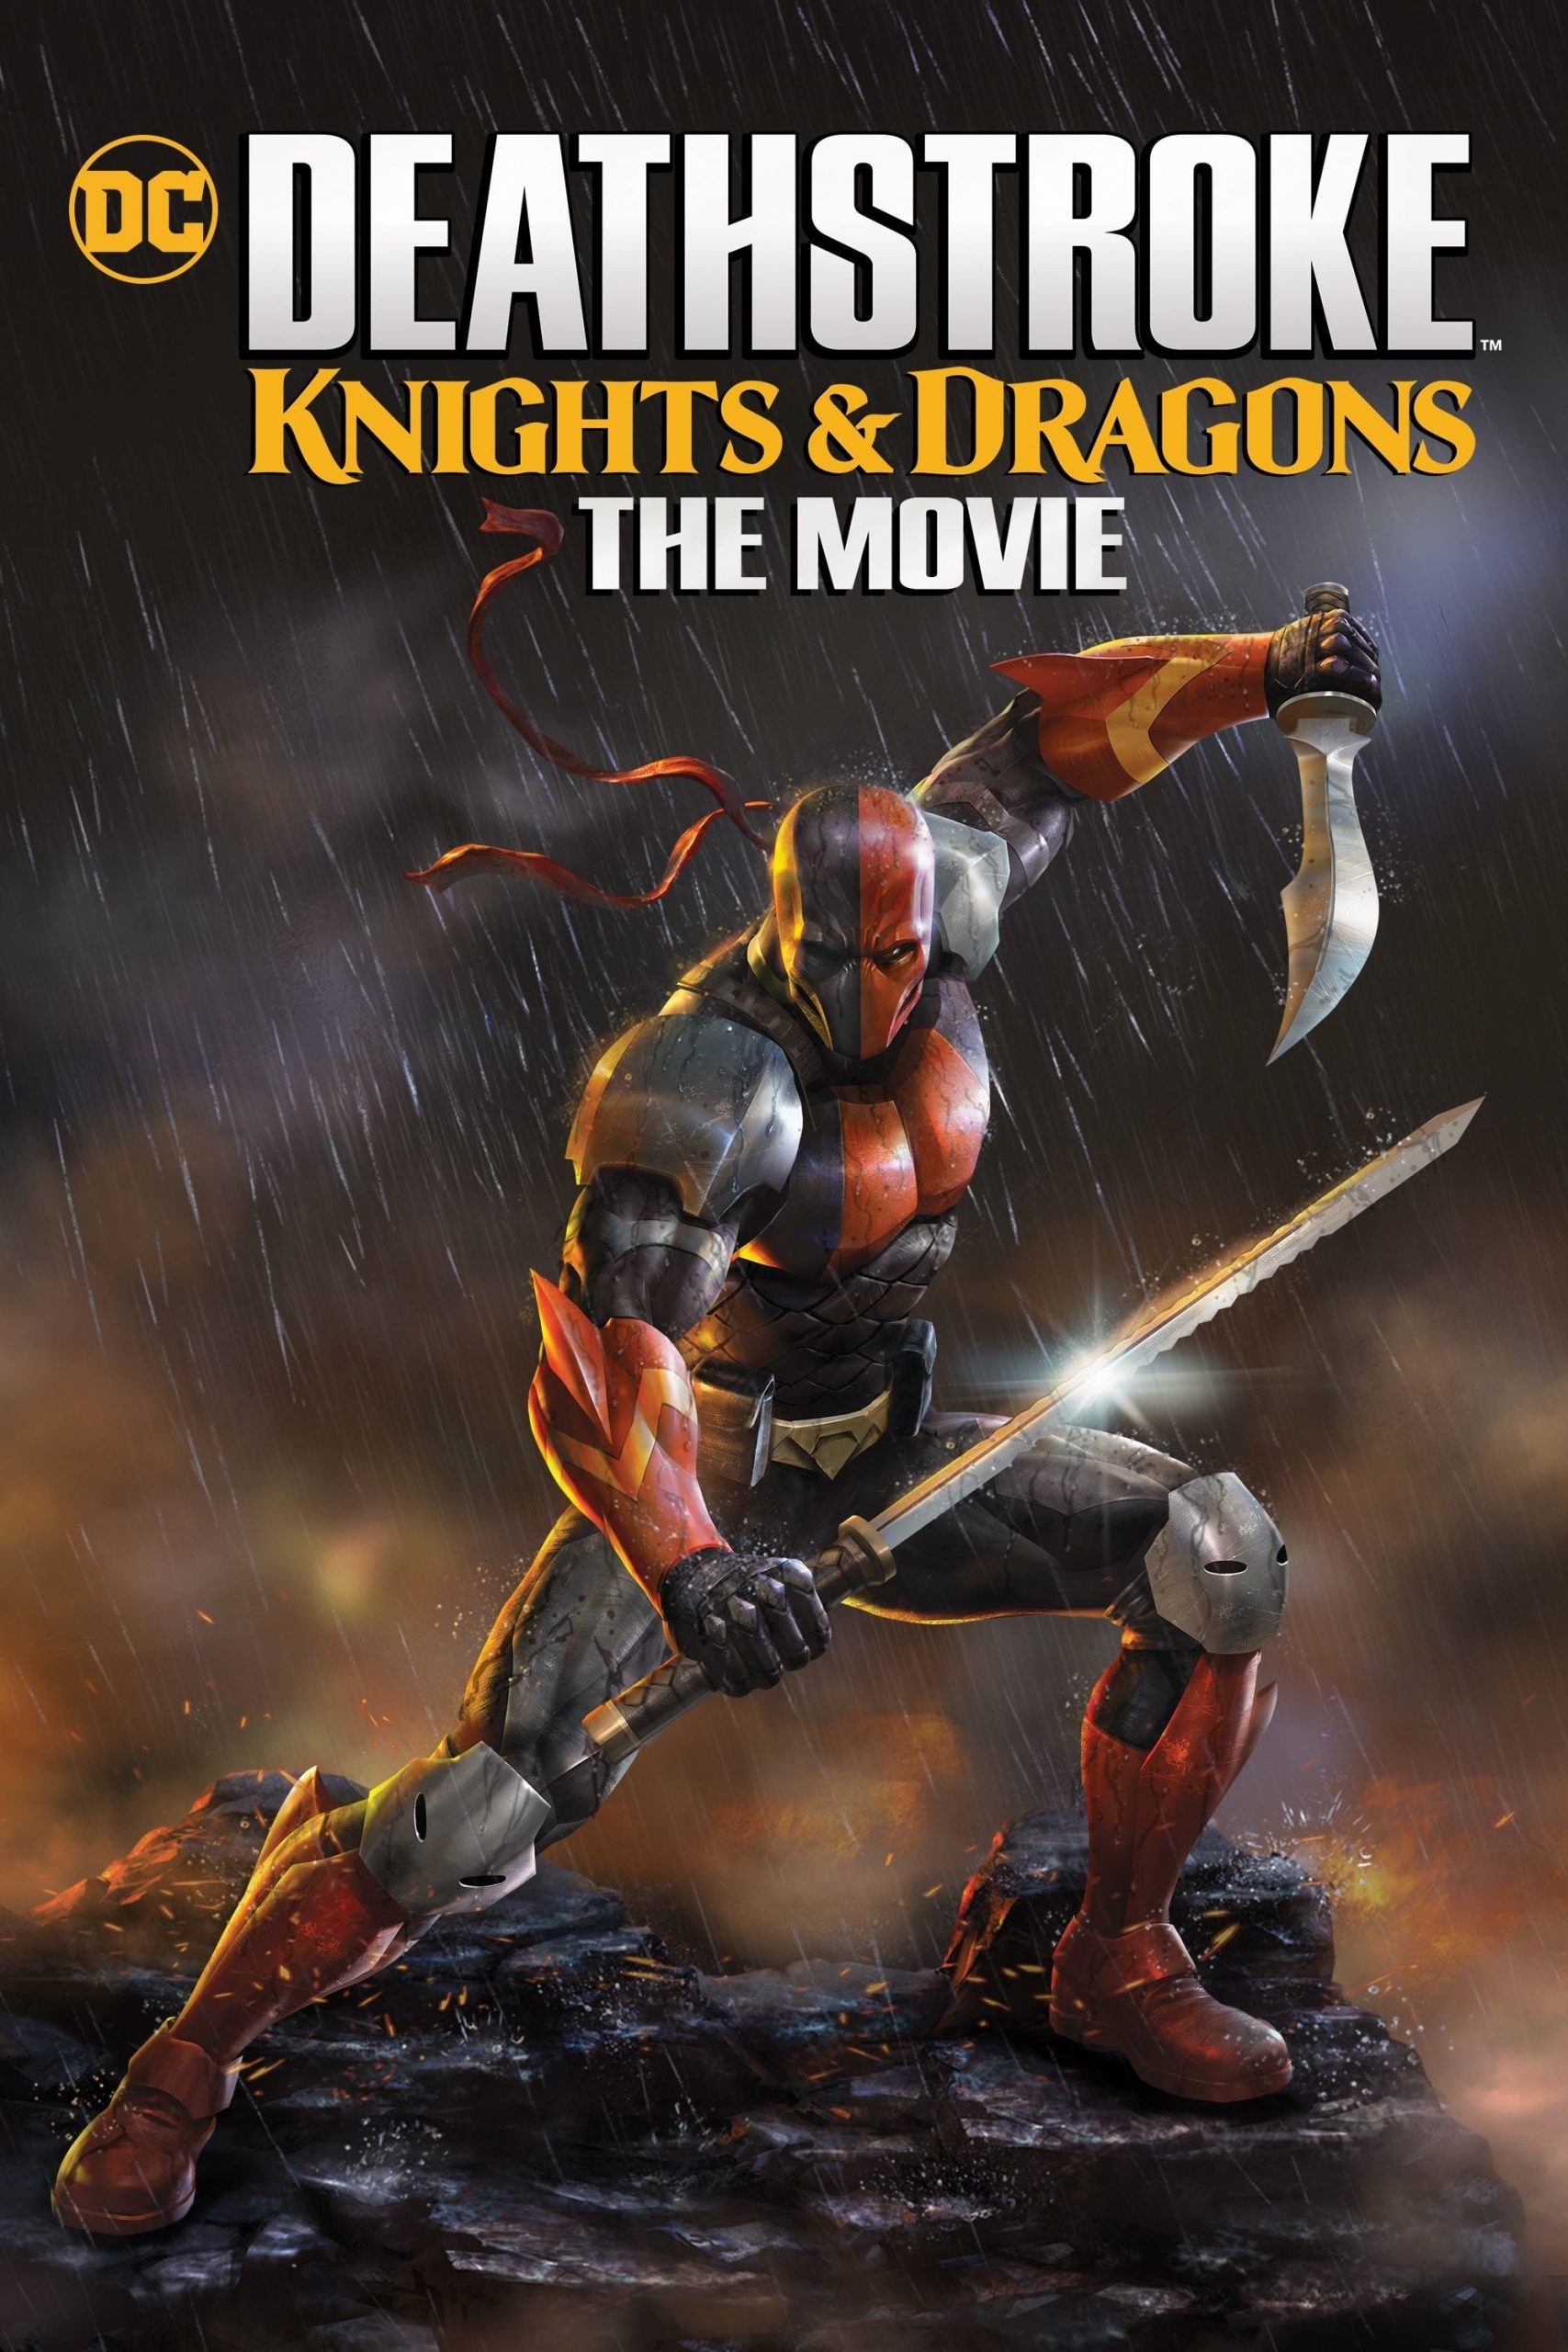 Deathstroke Knights & Dragons: The Movie [Sub-ITA] (2020)